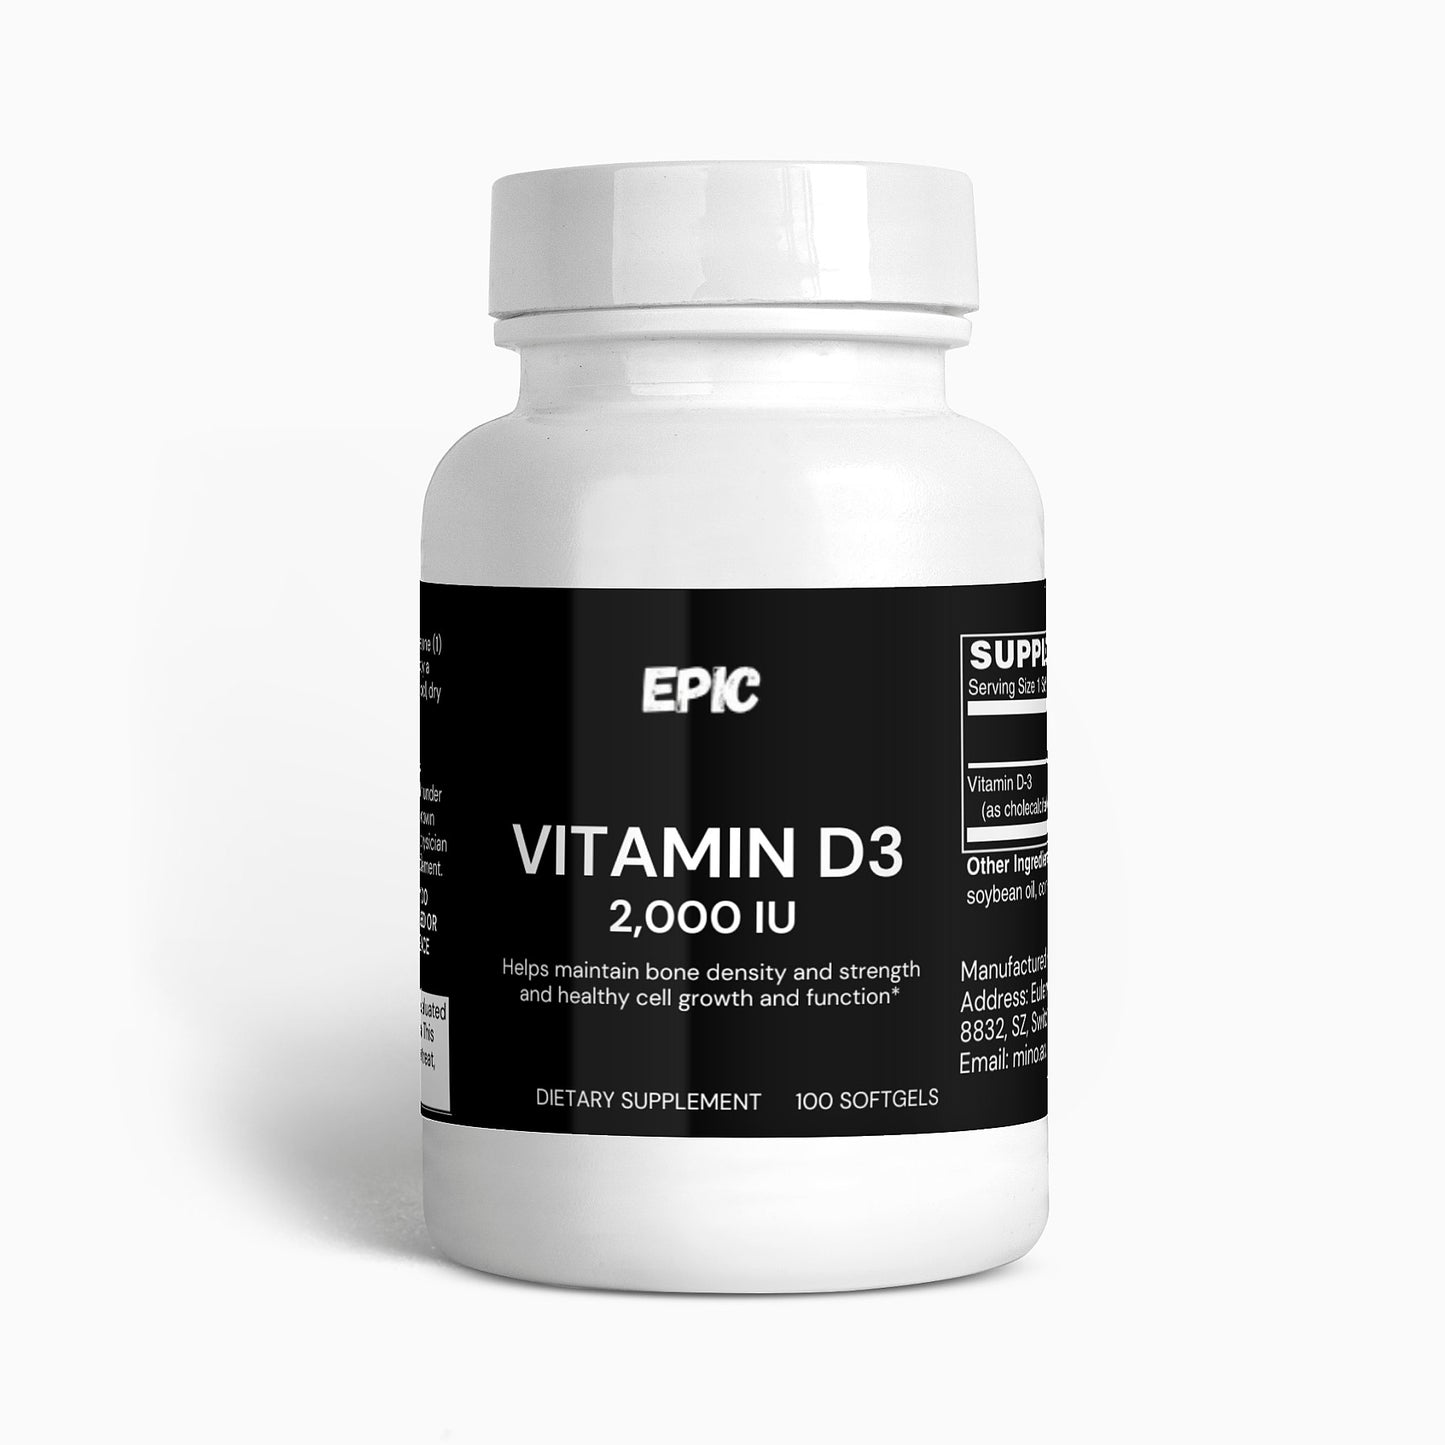 Epic Vitamin D3 2,000 IU